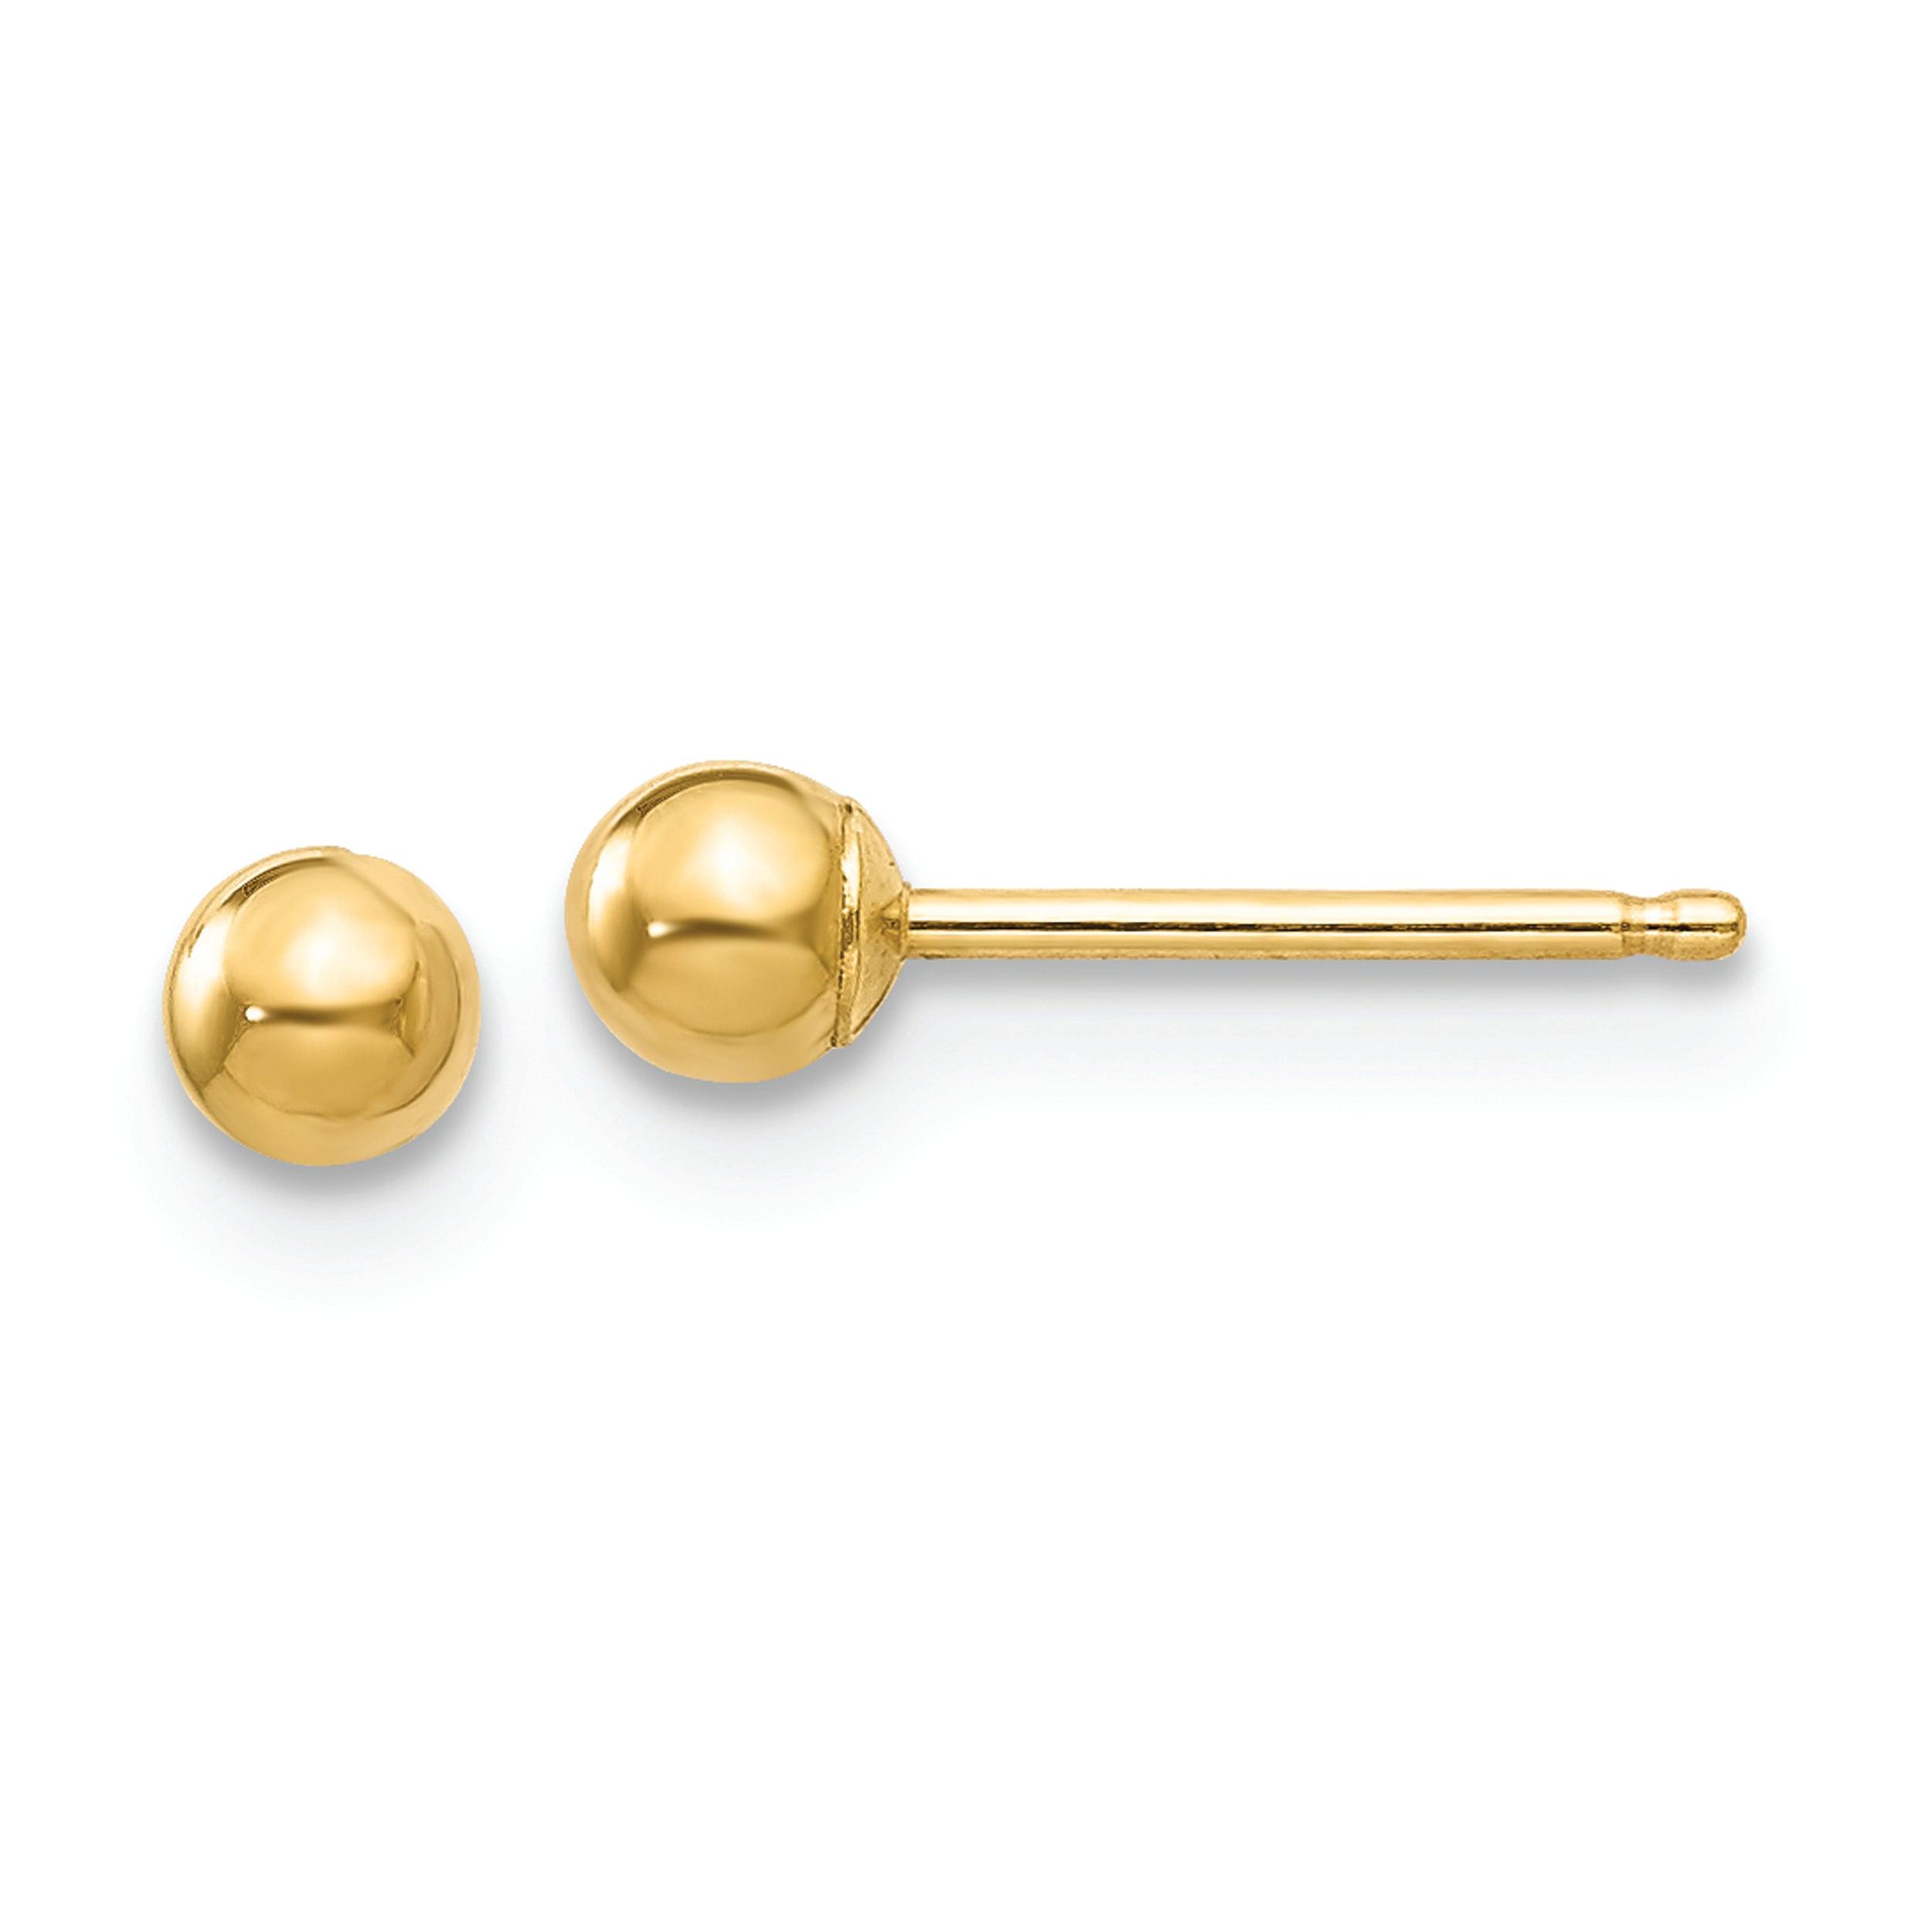 Quality Gold Earrings 14k Polished 3mm Ball Post Earrings